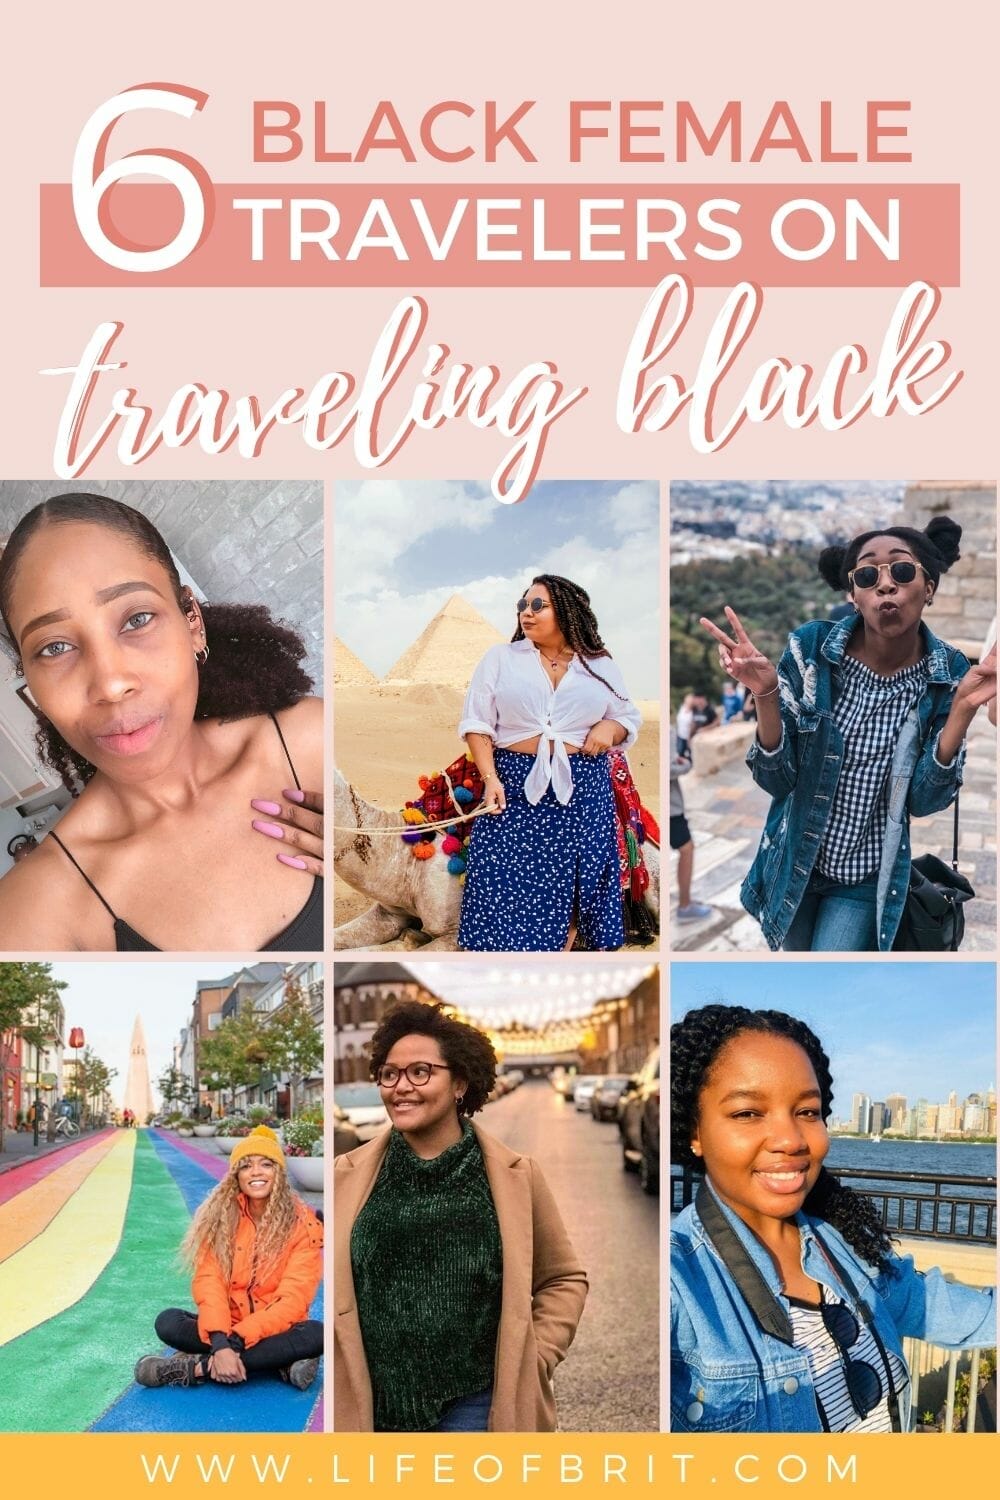 Black Female Travelers on traveling Black